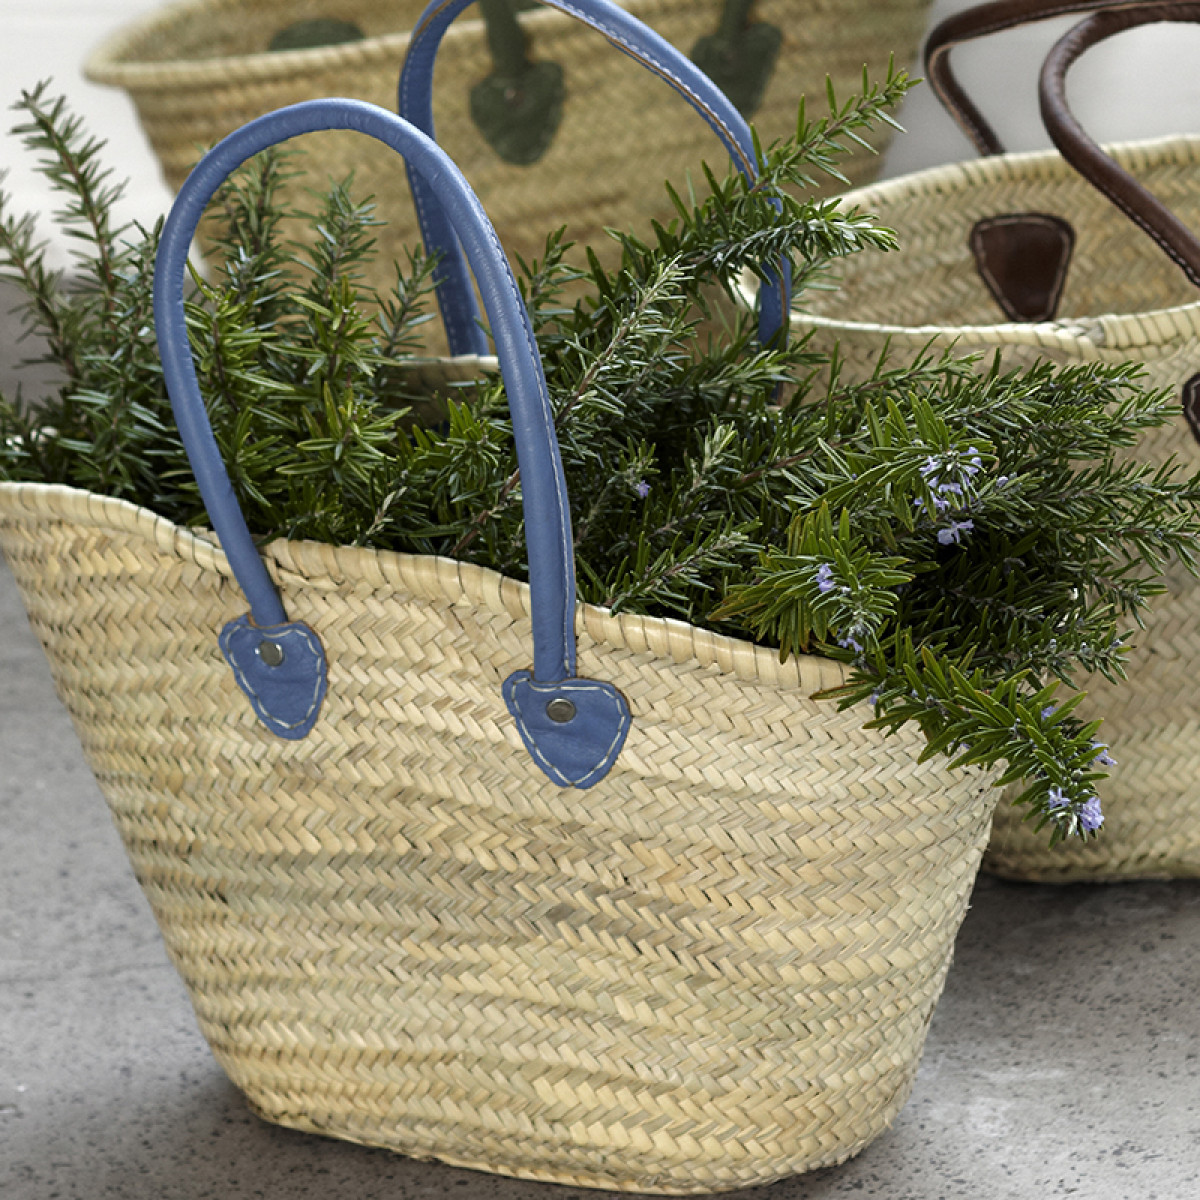 Le Panier French Market Basket with Deluxe Handle Amalfi Product Image 0